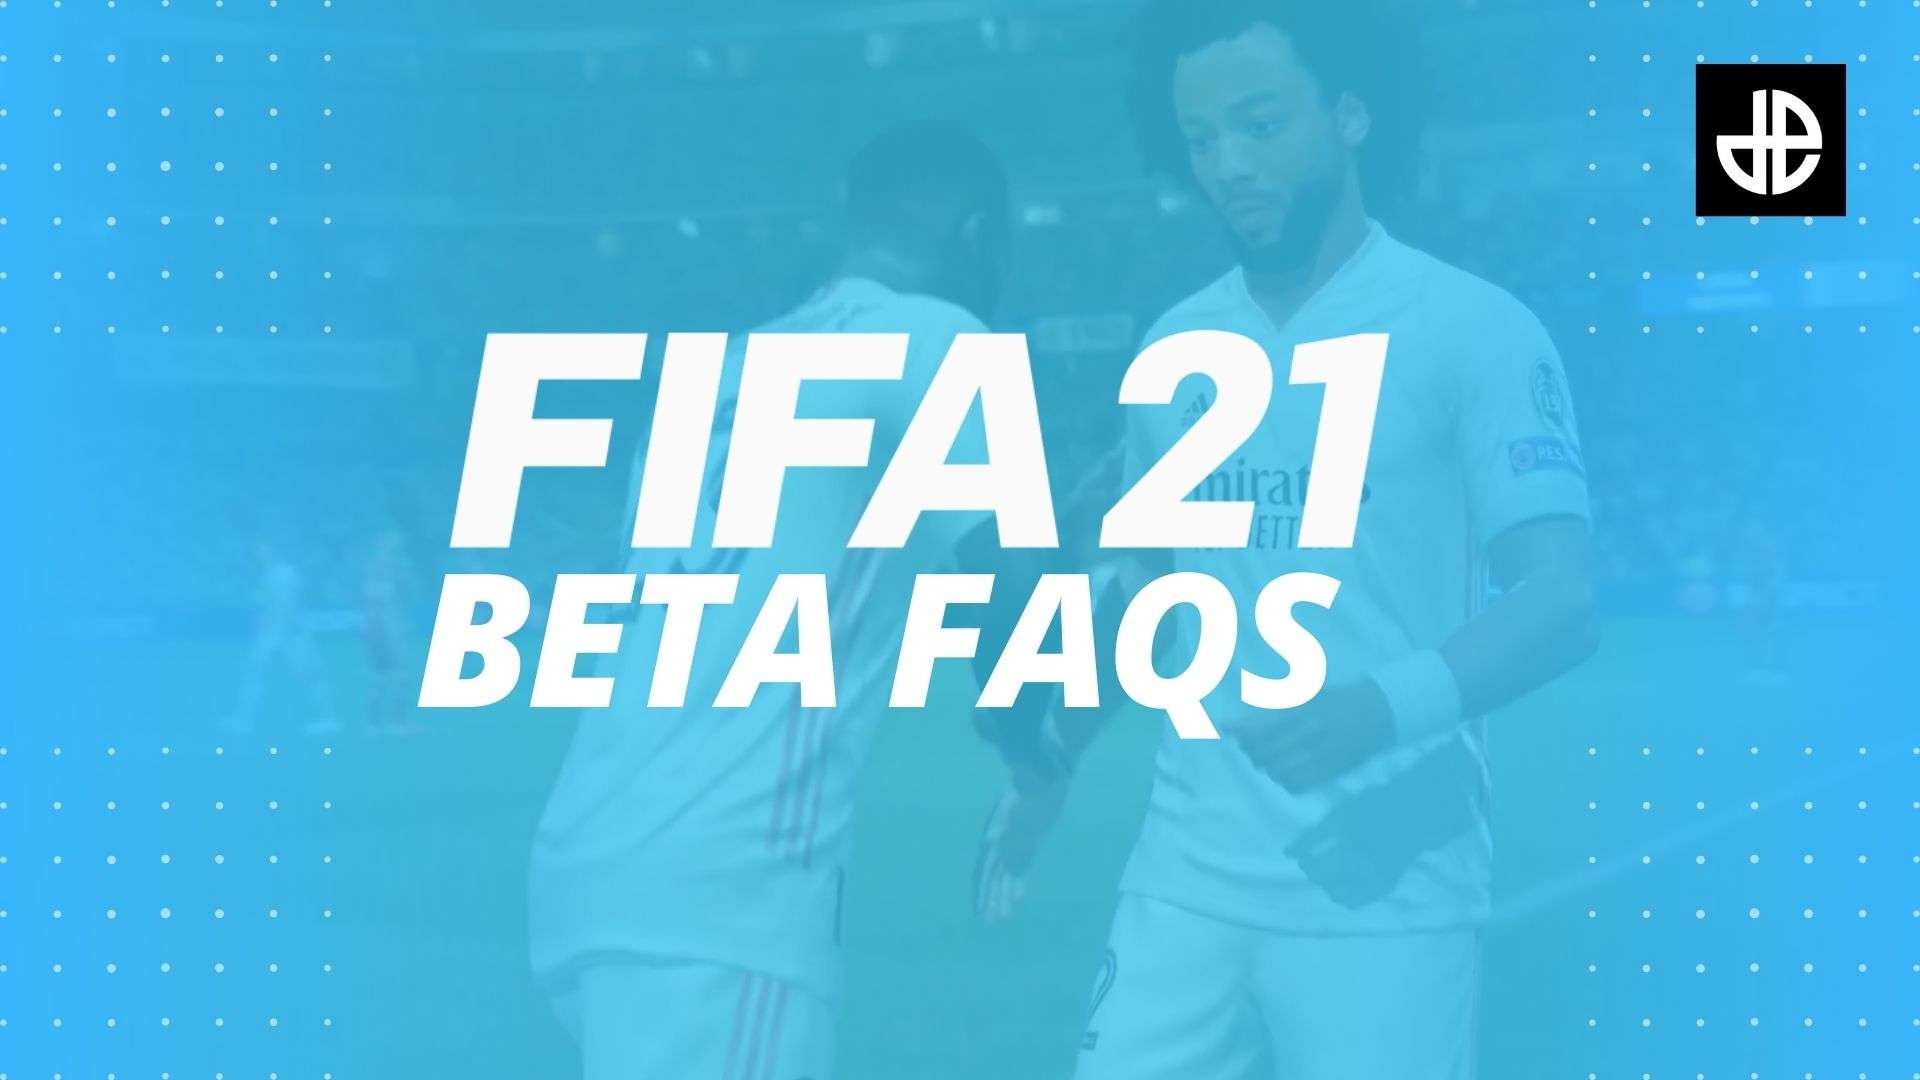 FIFA 21 beta